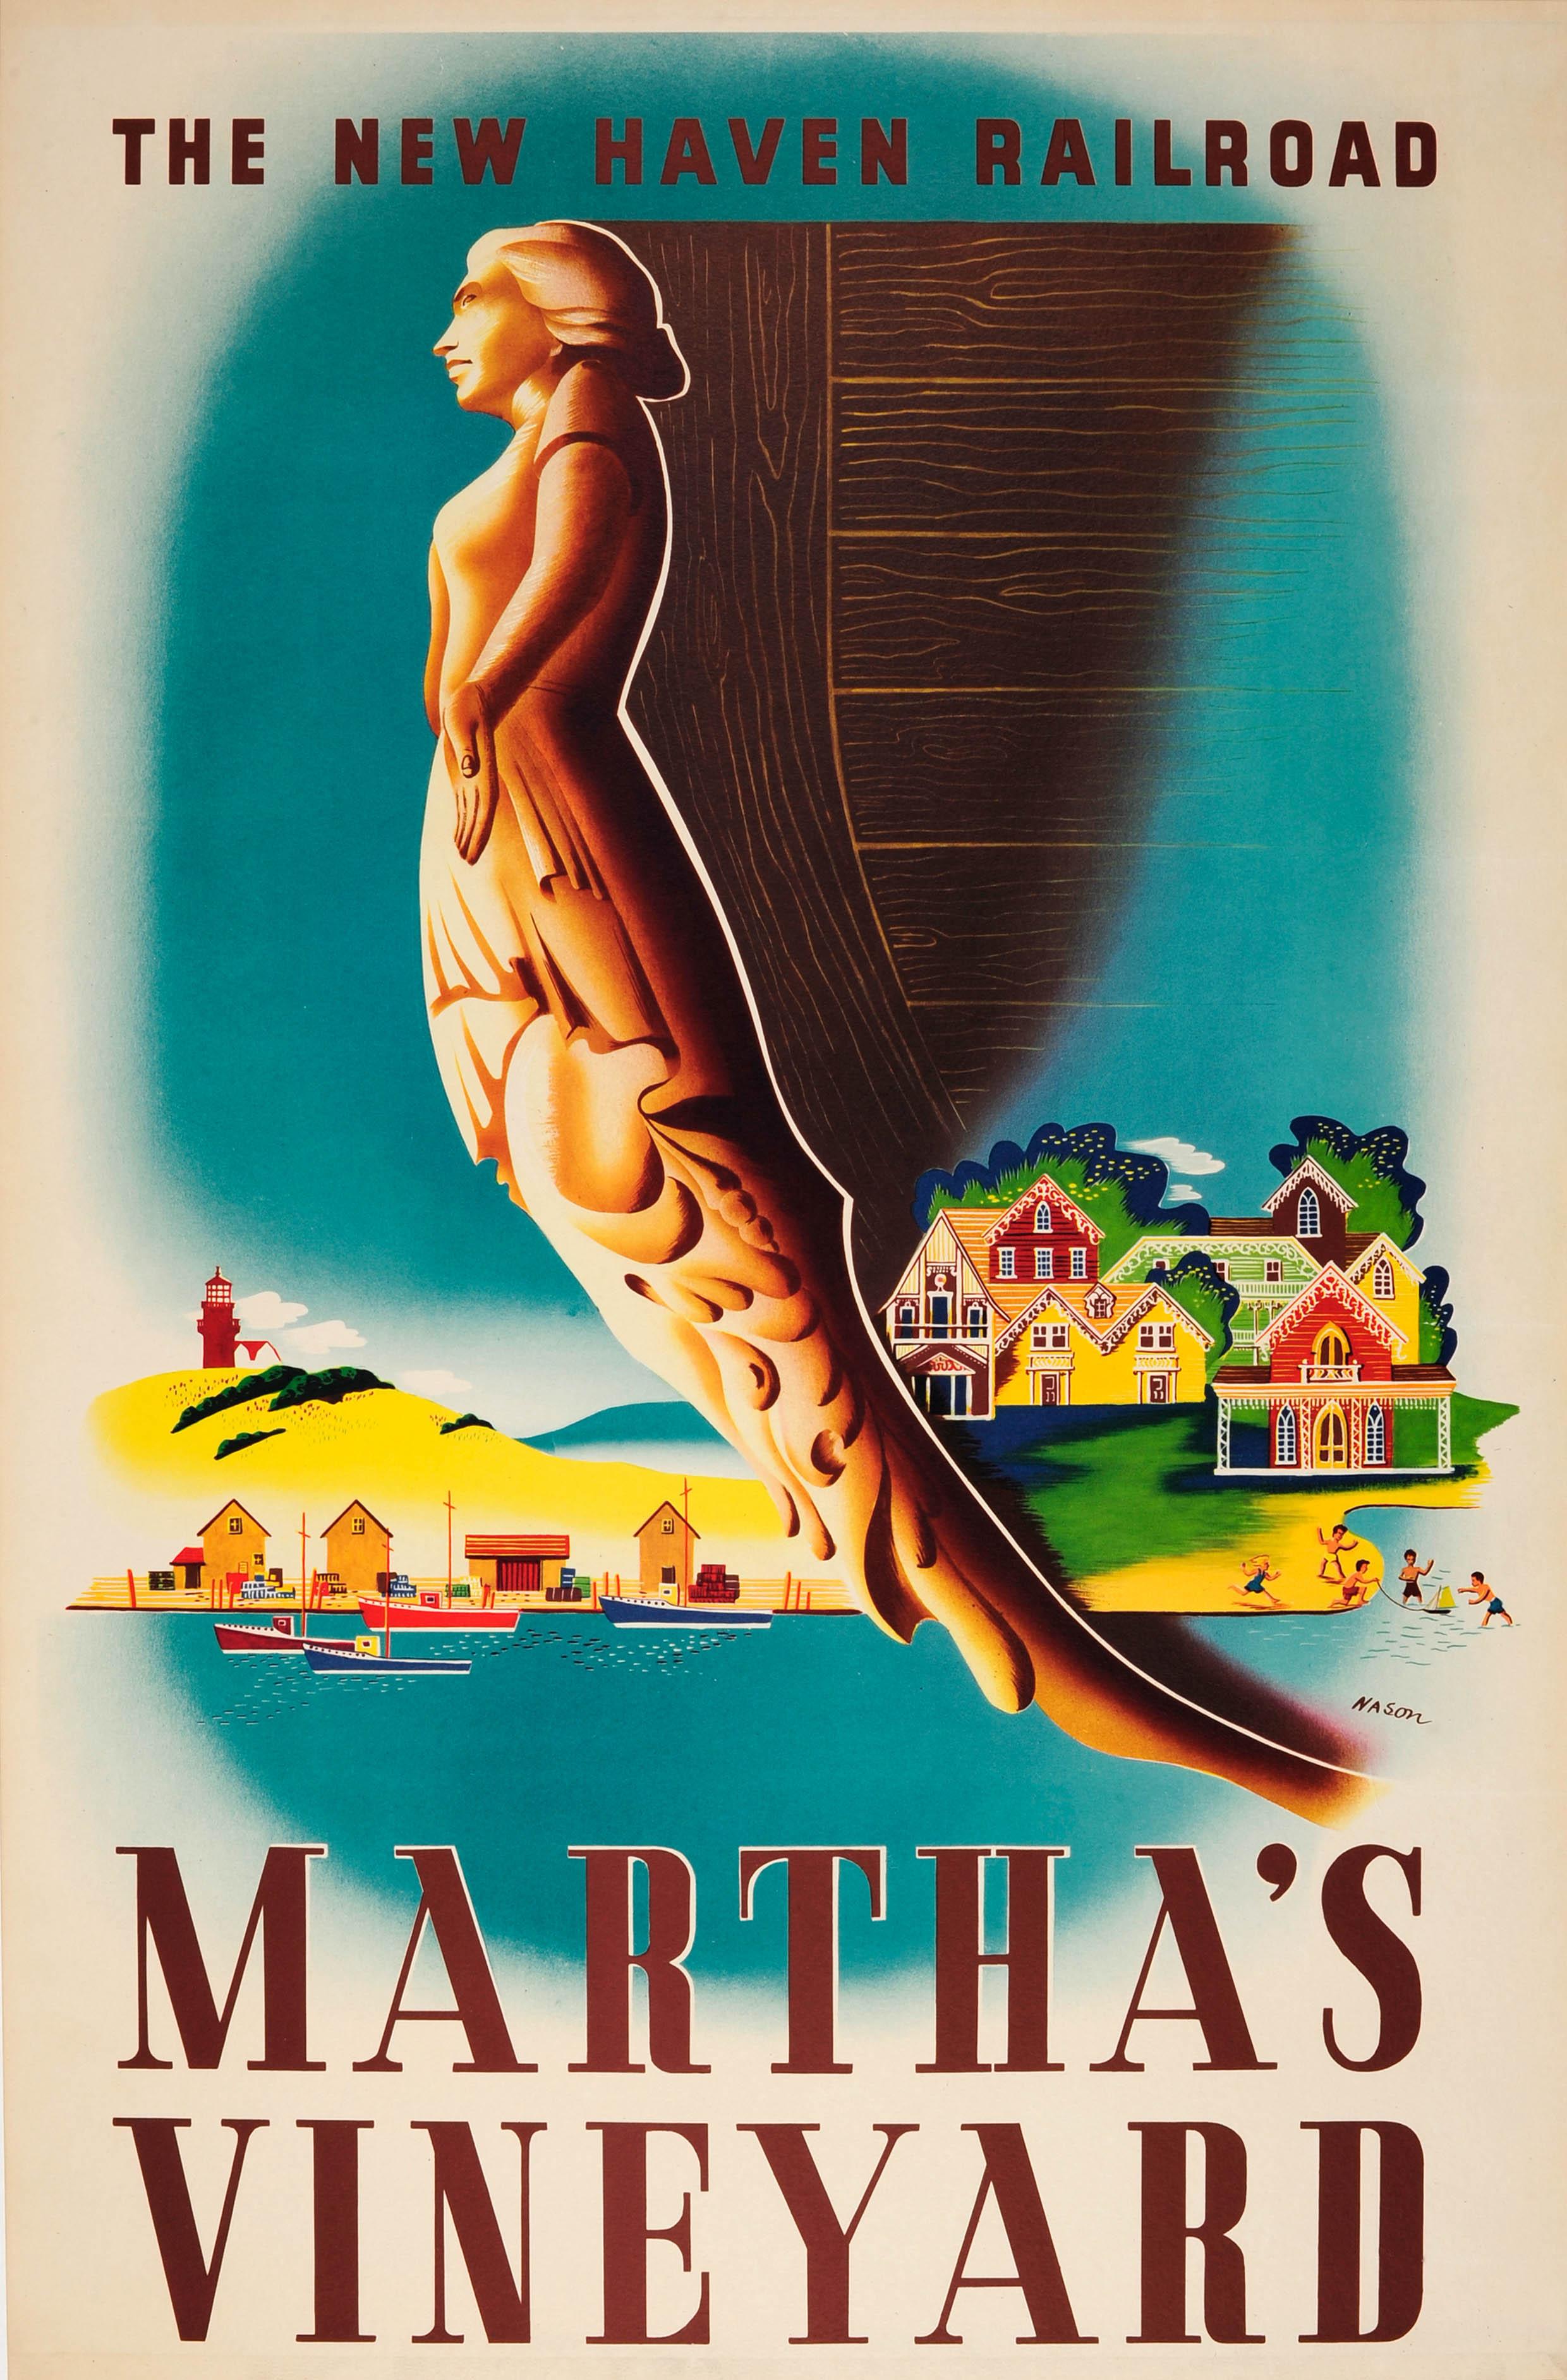 Ben Nason Print - Original Vintage Travel Poster For Martha's Vineyard By The New Haven Railroad